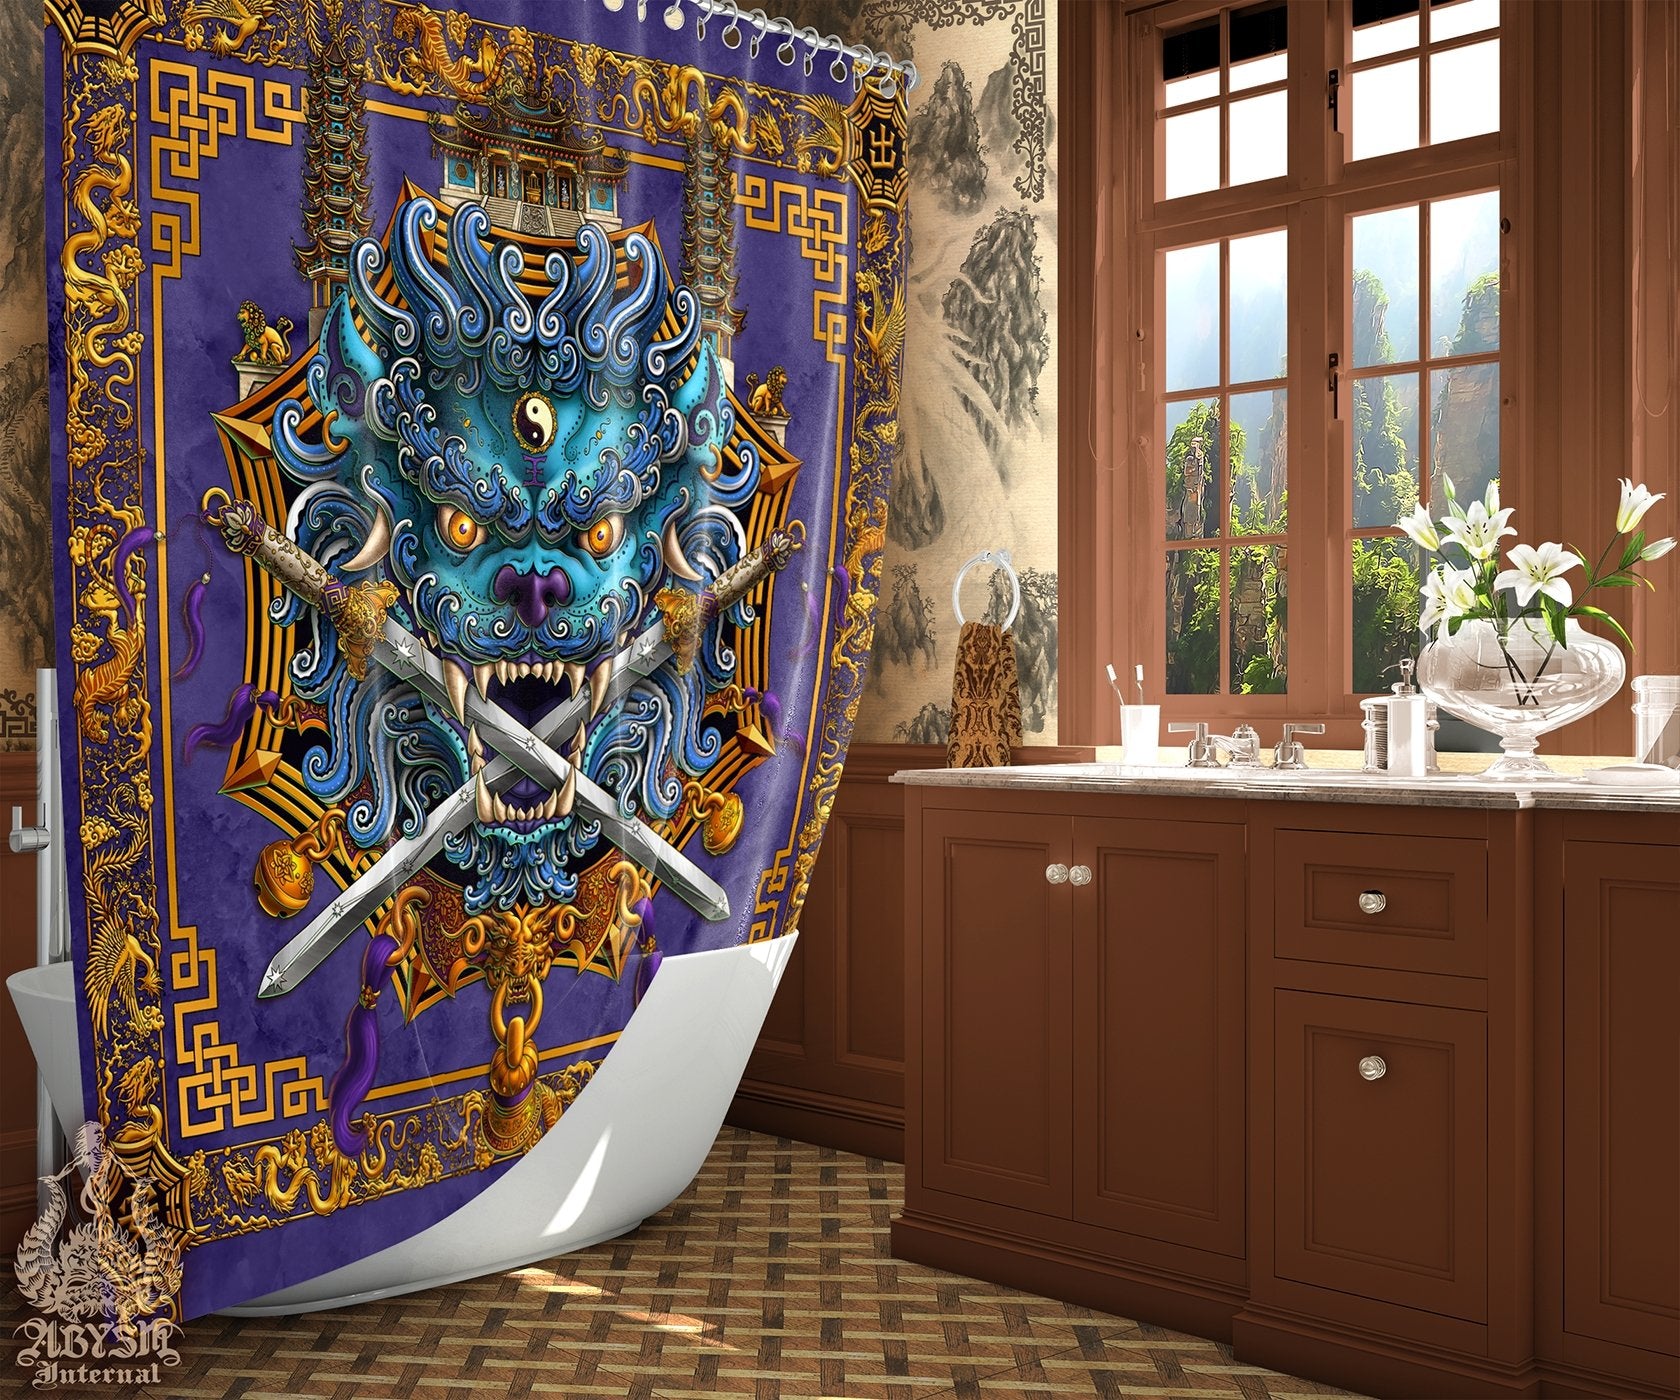 Lion Shower Curtain, Taiwan Sword Lion, Chinese Bathroom, Alternative Fantasy Decor, Asian Mythology - Blue and Purple - Abysm Internal